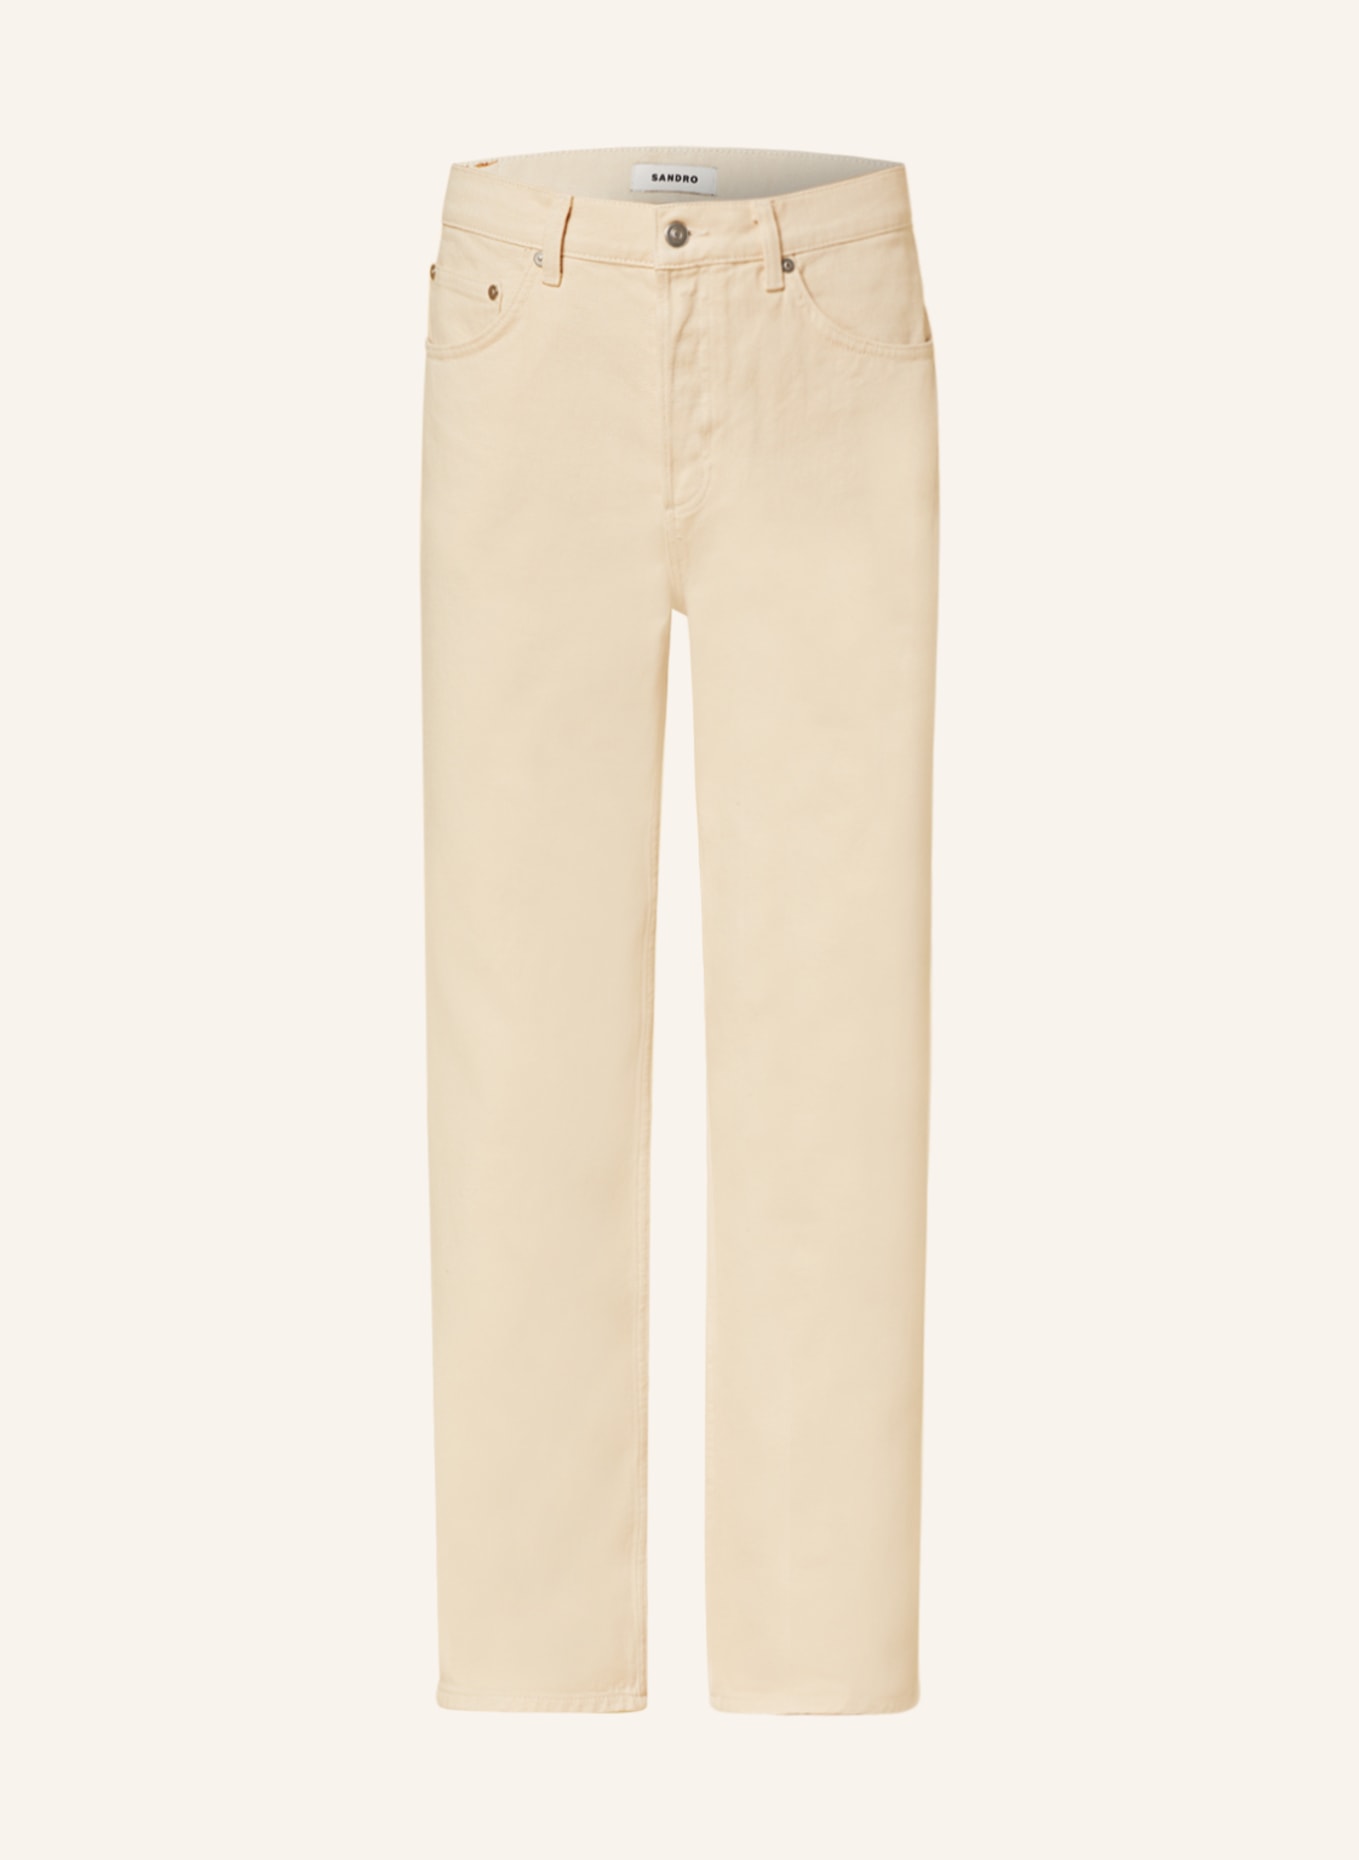 SANDRO Jeans Regular Fit, Farbe: 11 ECRU (Bild 1)